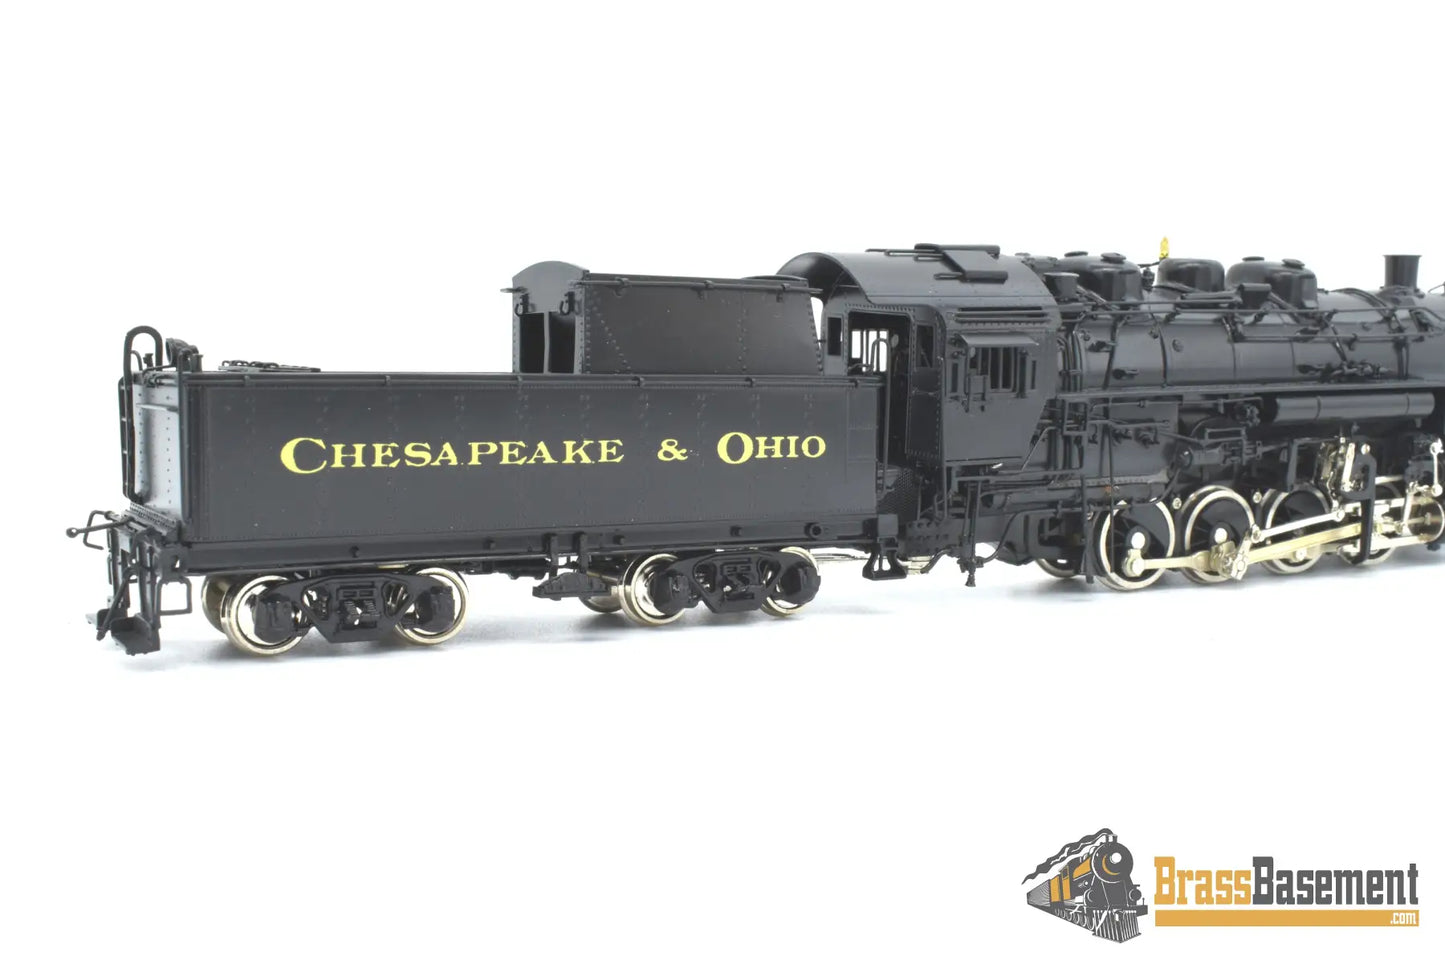 Ho Brass - Psc 16136 - 1 C&O Chesapeake & Ohio 0 - 8 - 0 C - 16 Factory Paint Steam